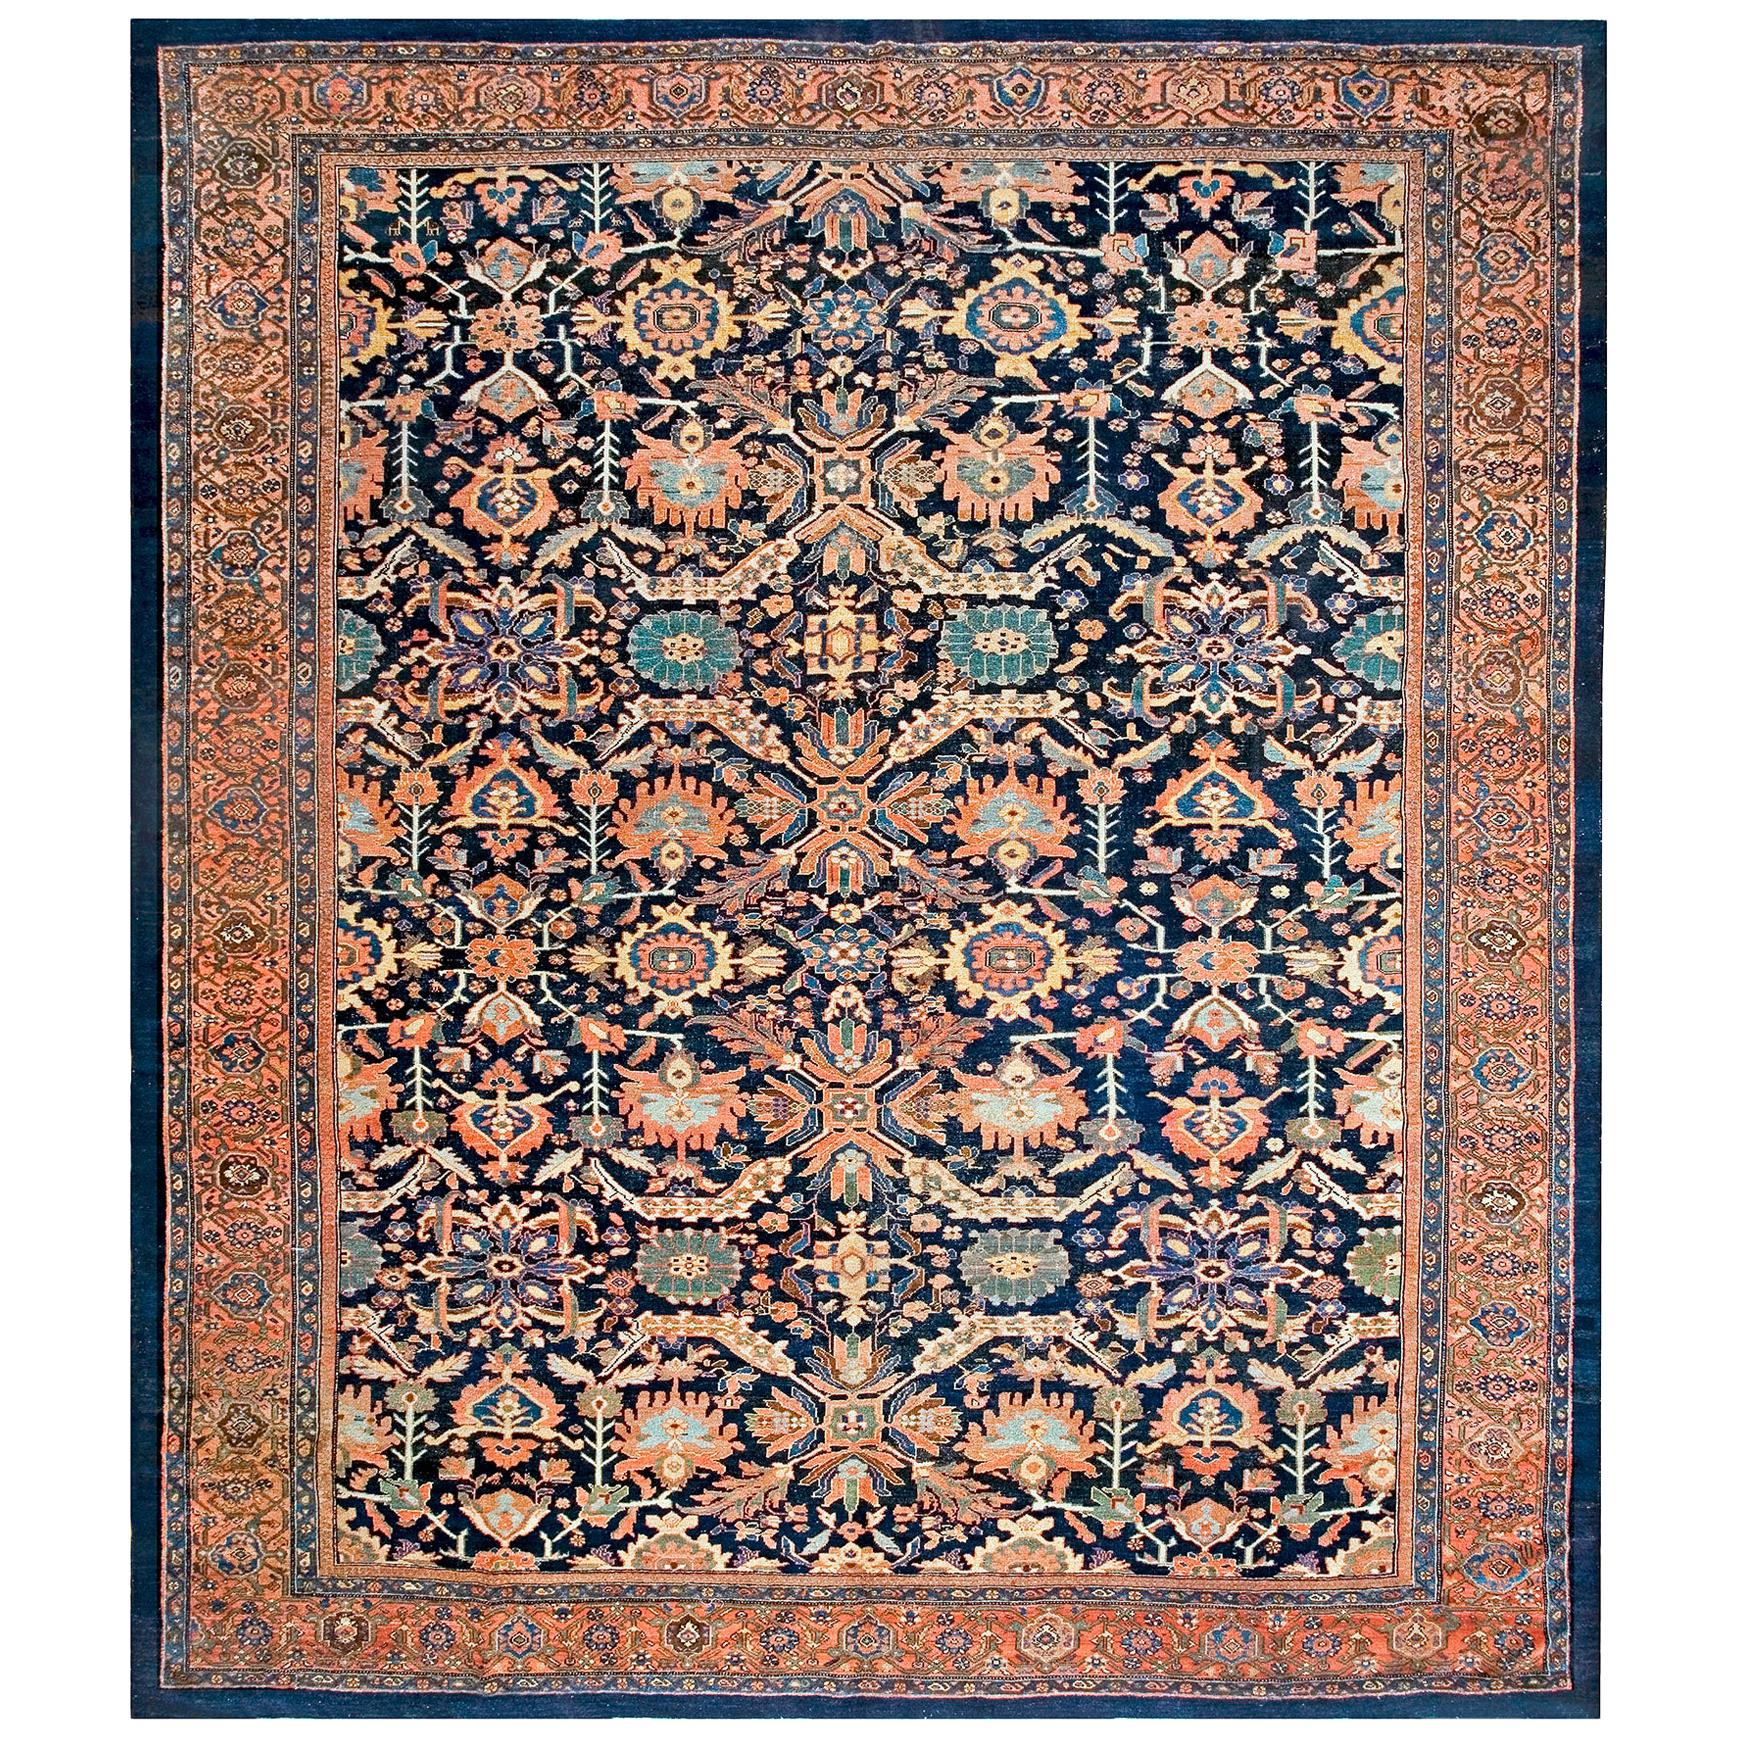 19th Century Persian Malayer Carpet ( 12'4" x 14'8" - 375 x 448 ) For Sale